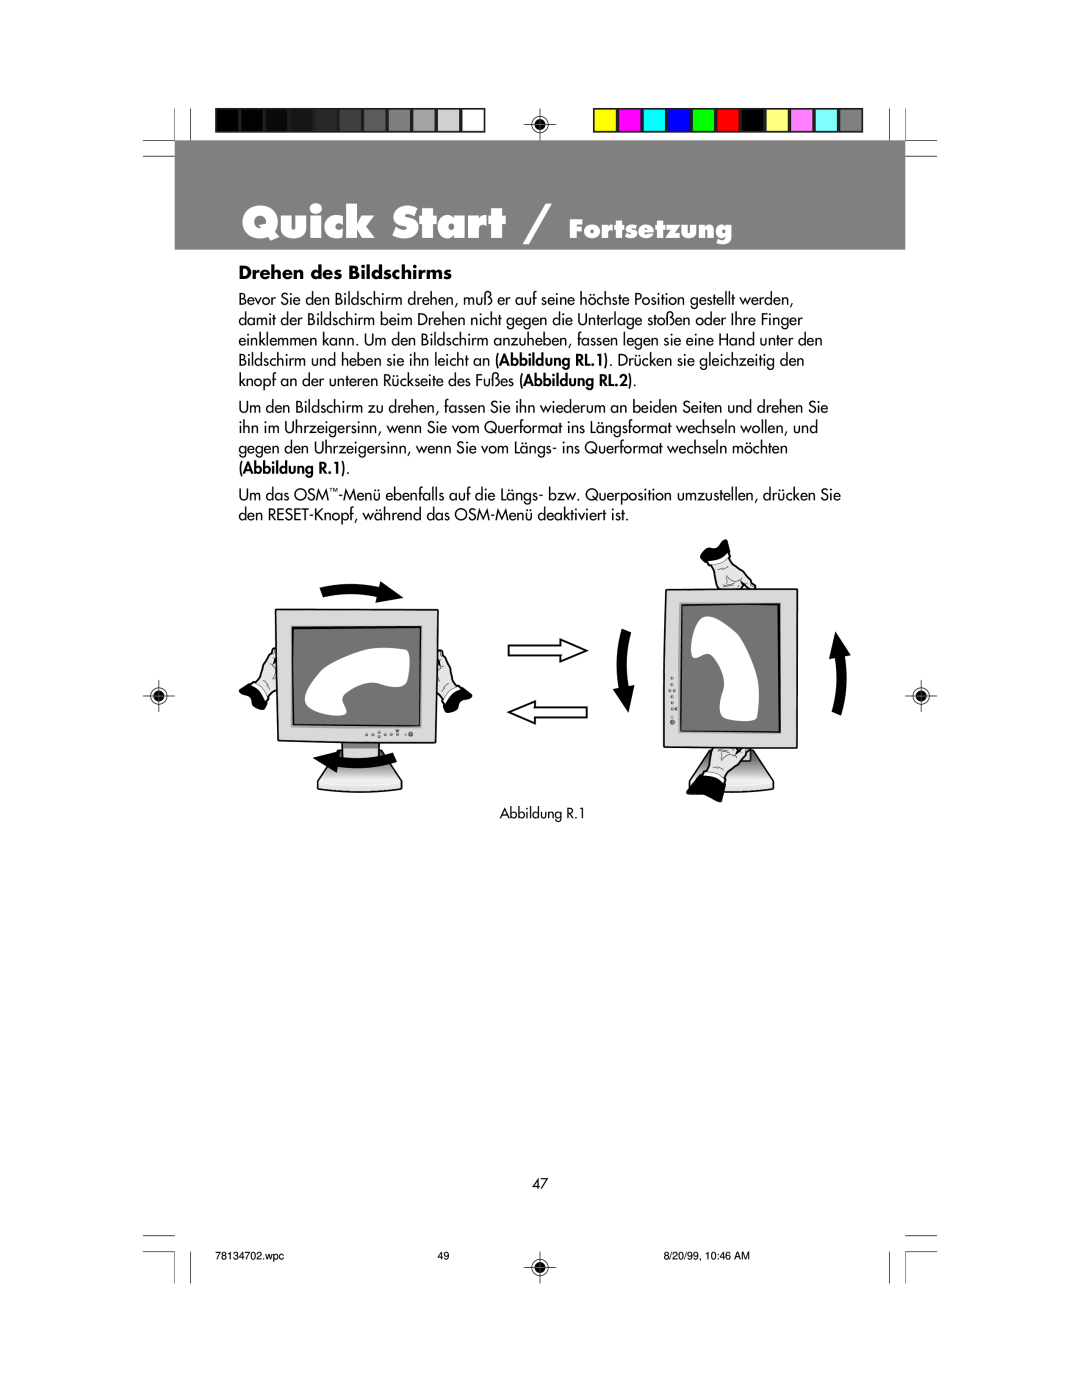 NEC LCD1510+ user manual Quick Start / Fortsetzung, Drehen des Bildschirms 